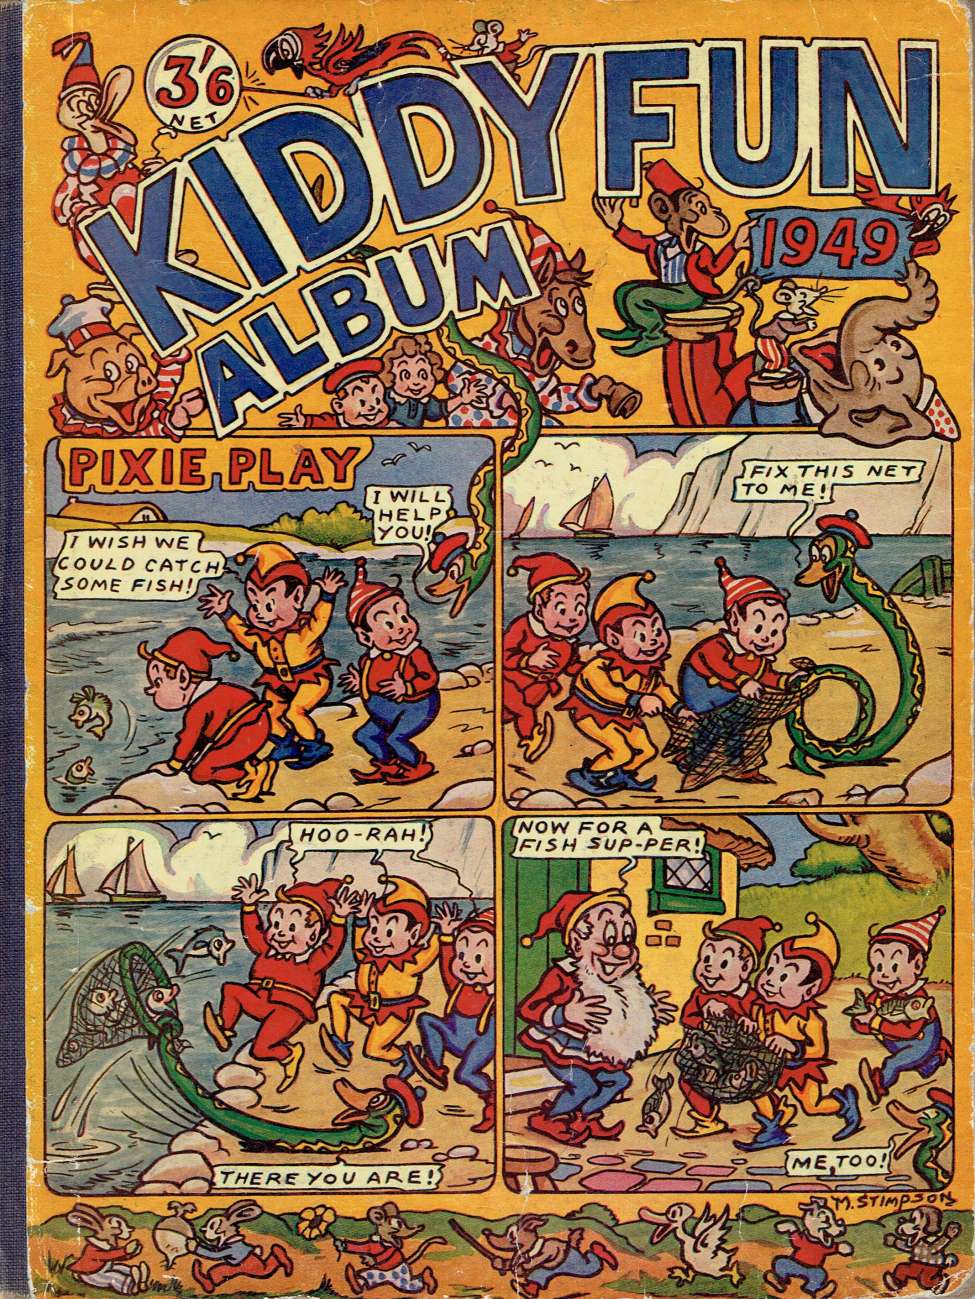 Comic Book Cover For Kiddyfun Album 1949